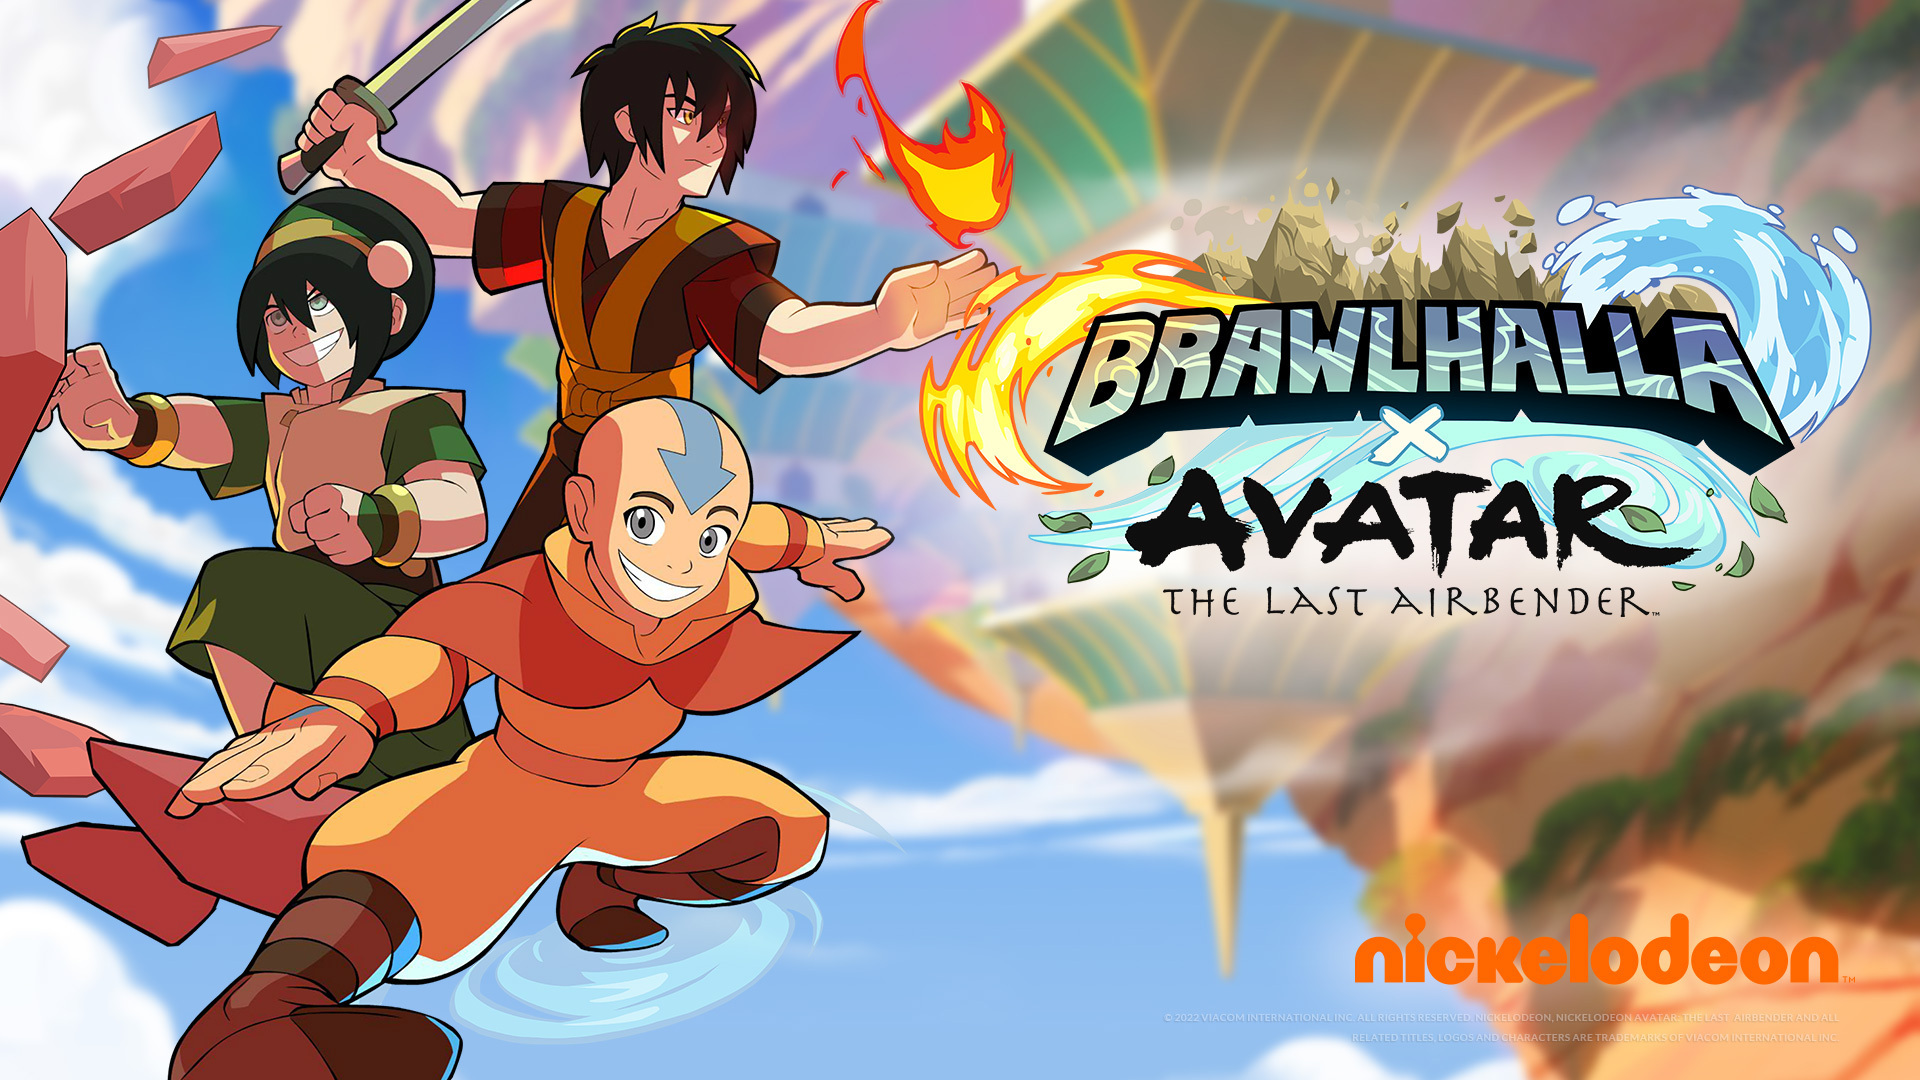 Avatar: the Last Airbender Comes to Brawlhalla November 16